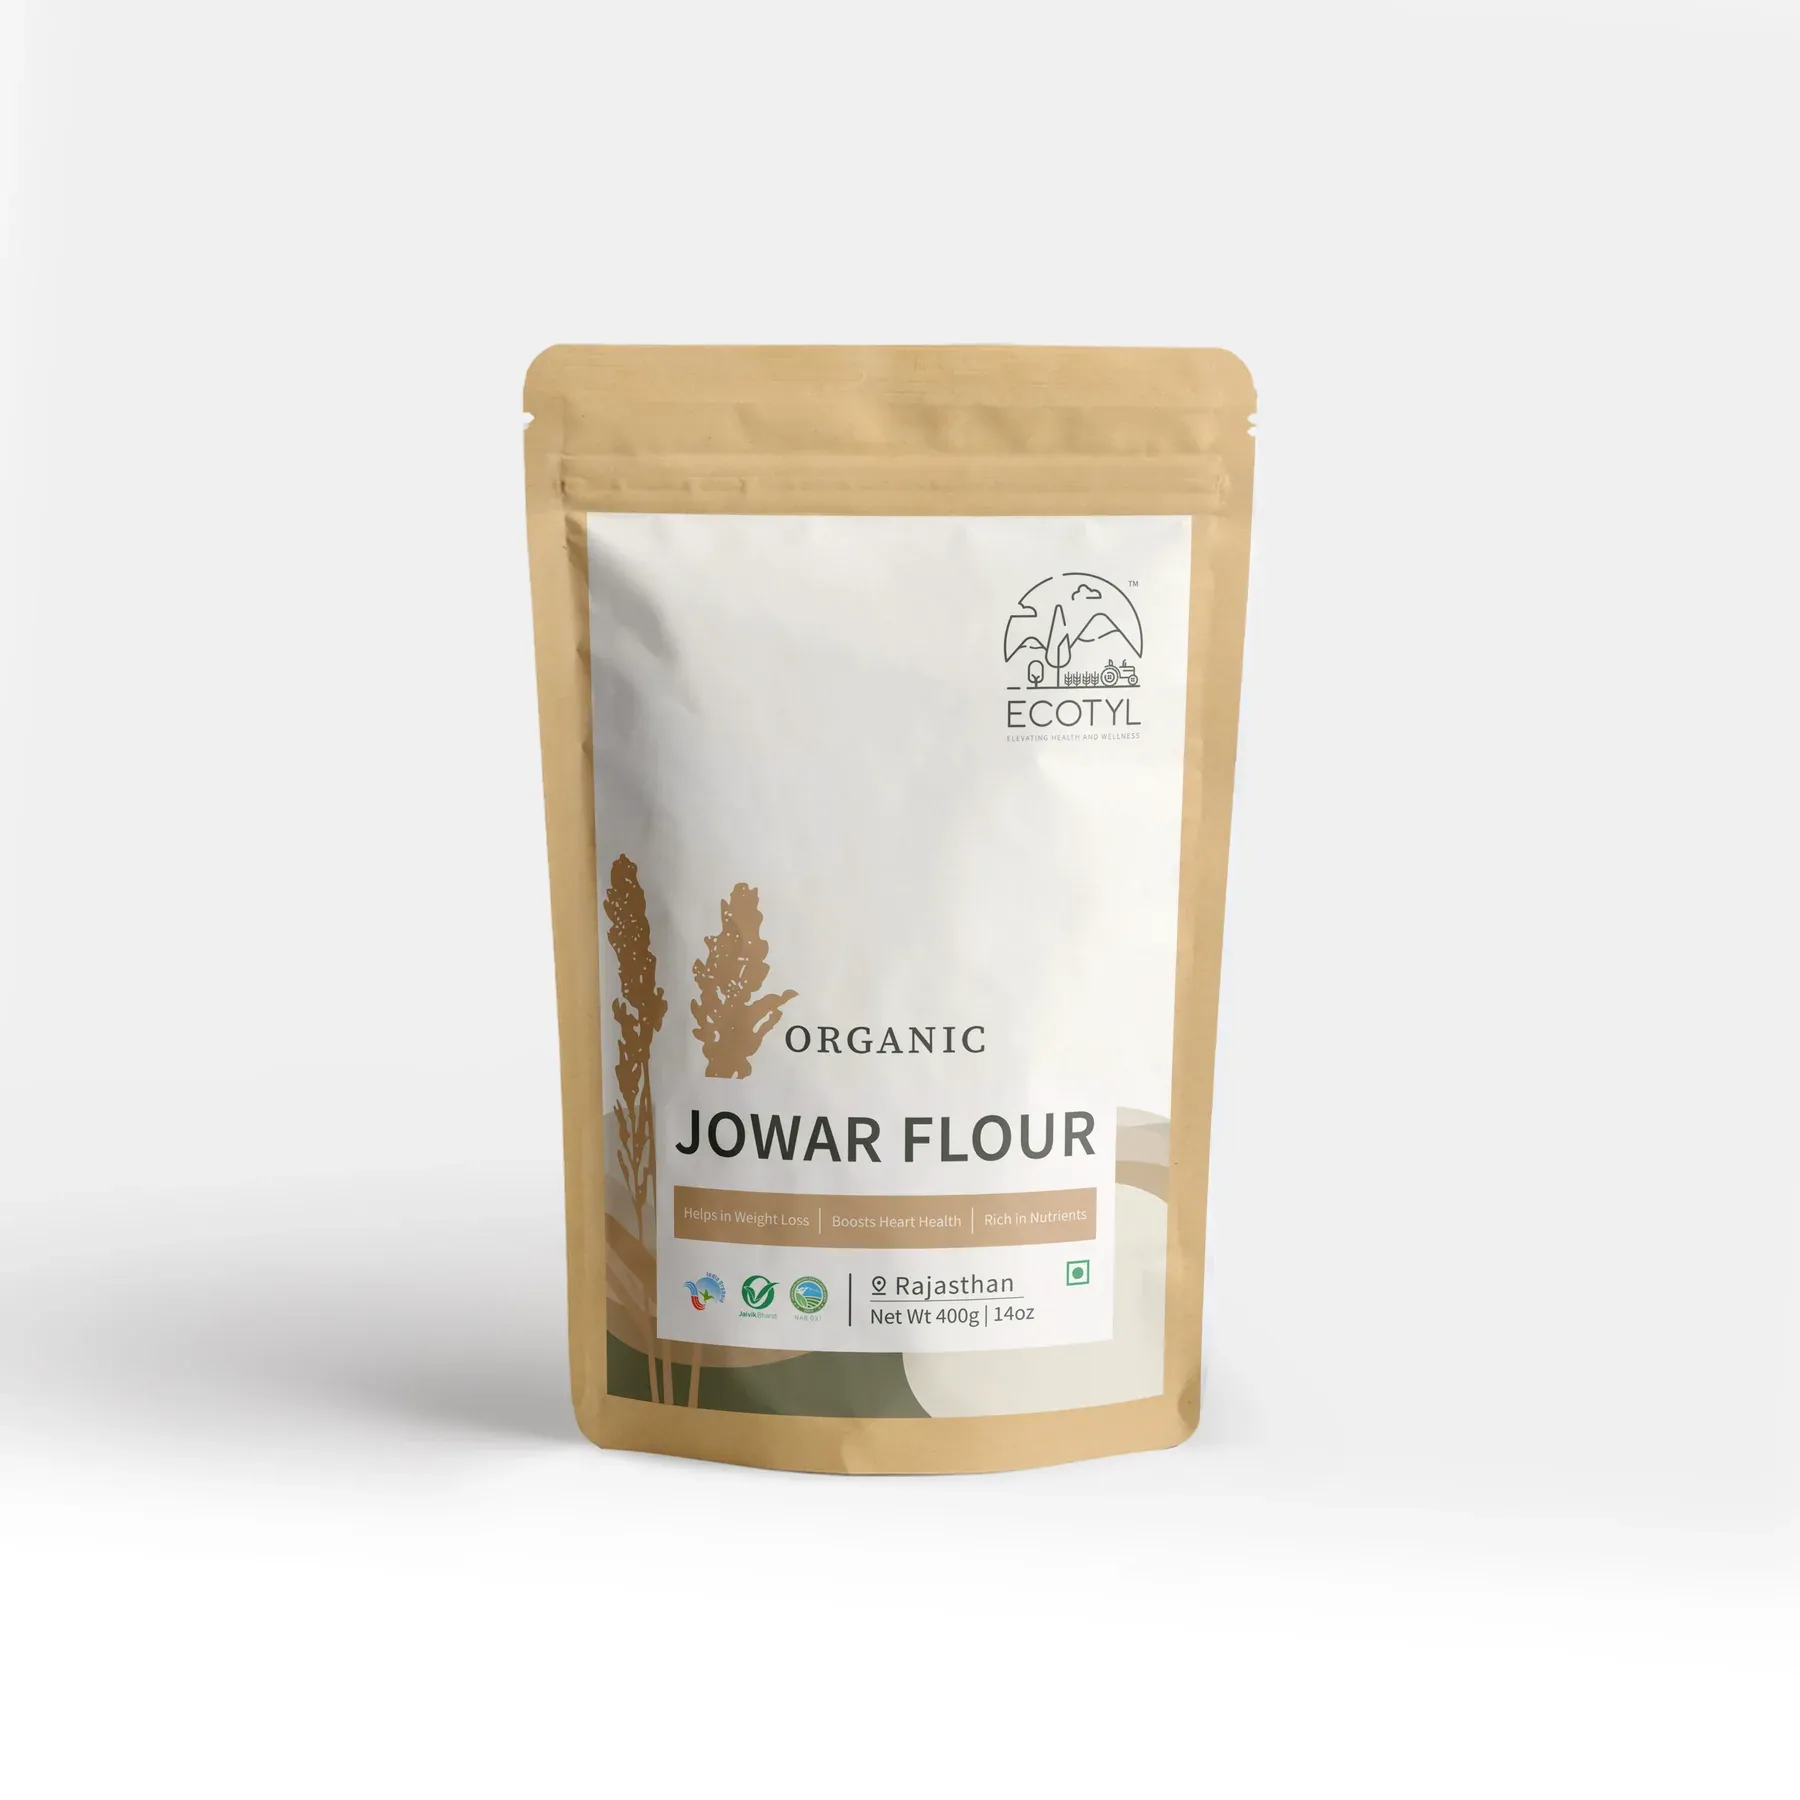 Ecotyl Organic Jowar Flour Image